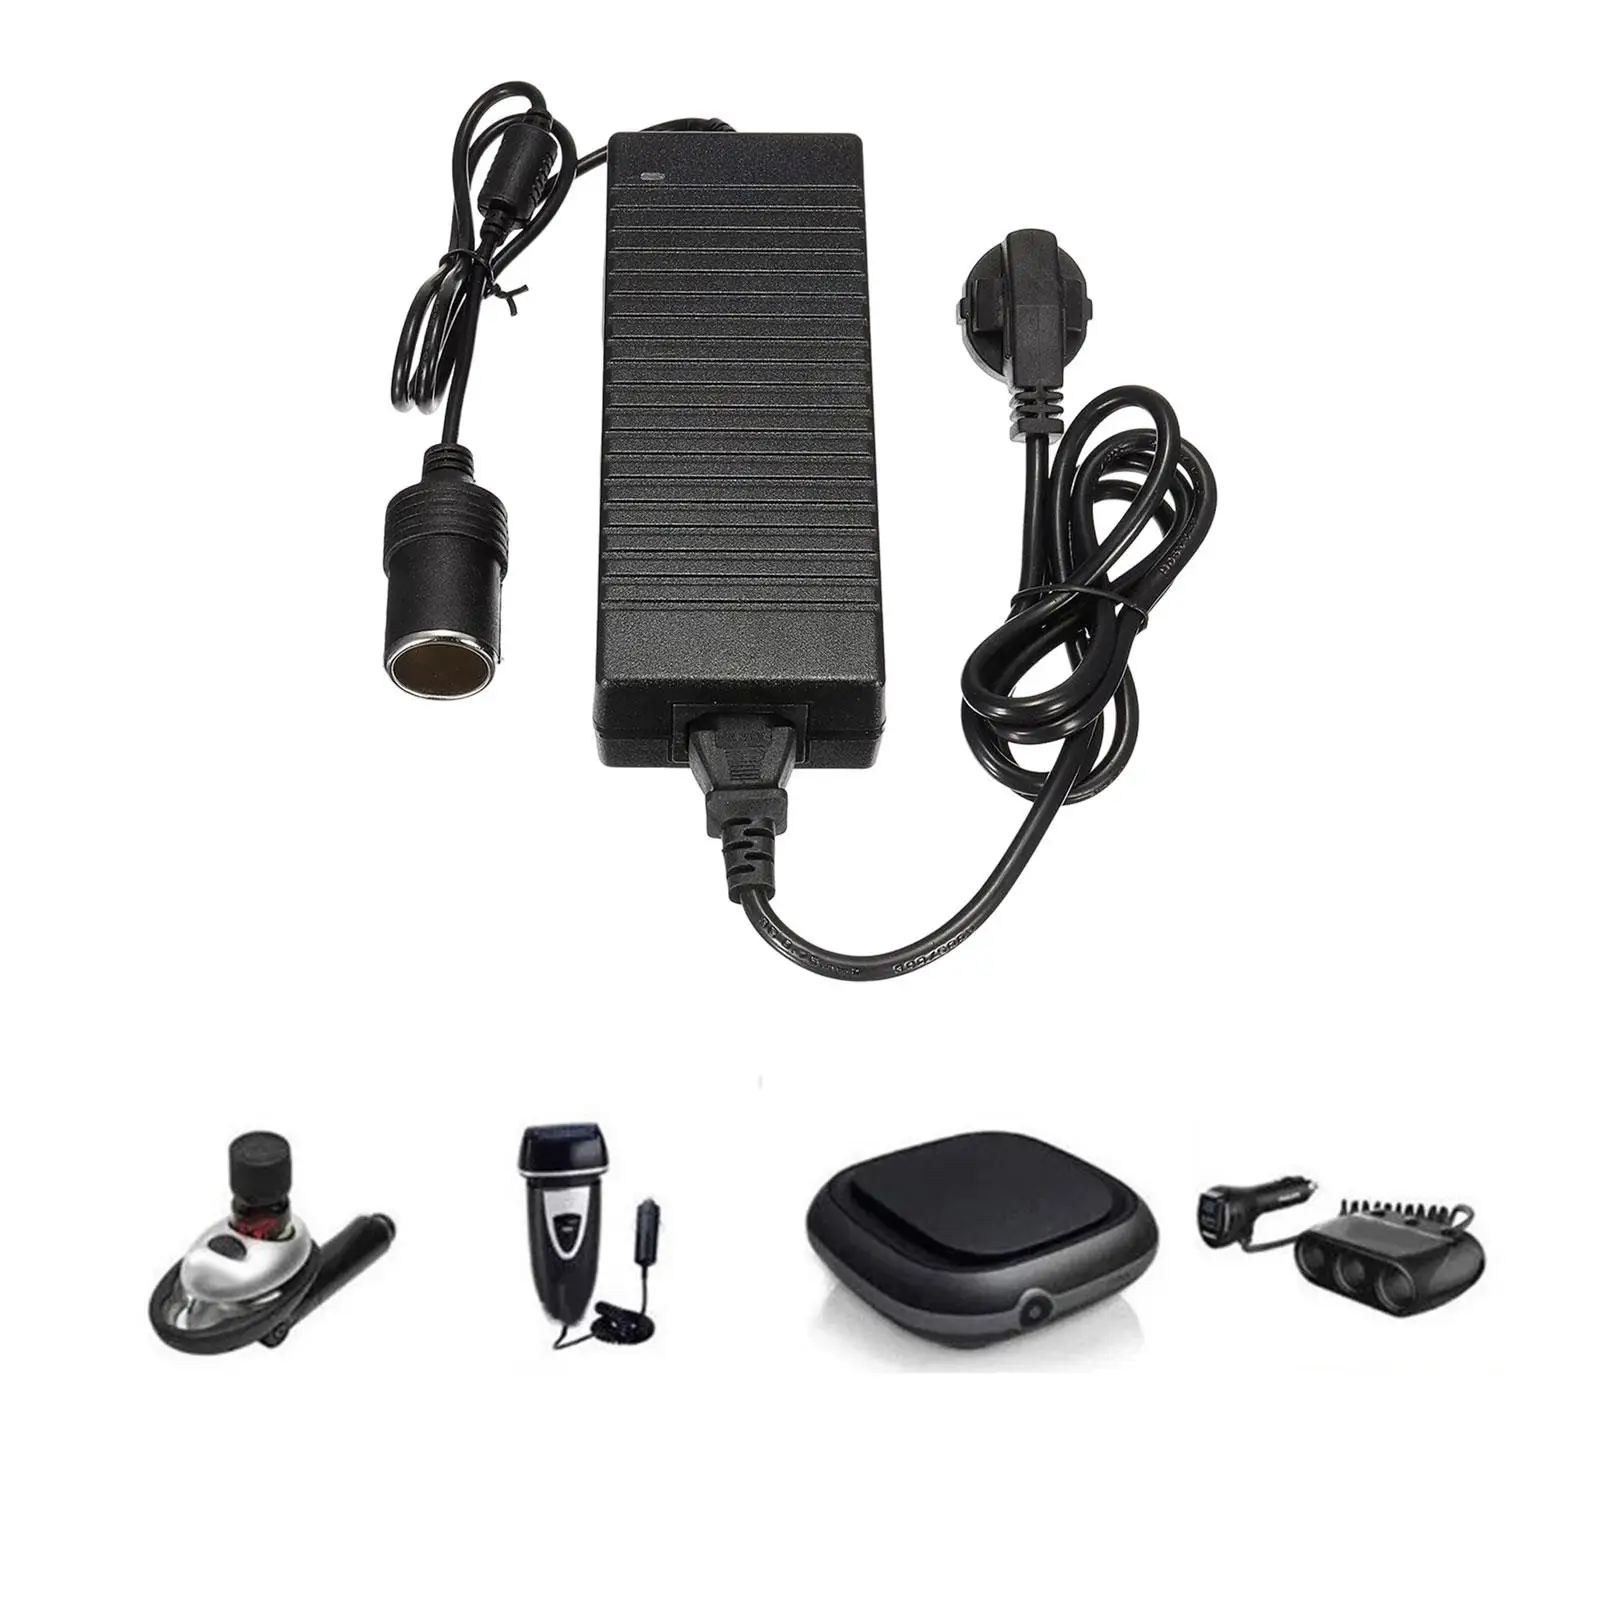 Socket Power Adapter 100V-240V to 12V 10A Multifunction  cessories Portable Travel Car V uum Tire Inflator   to DC Converter